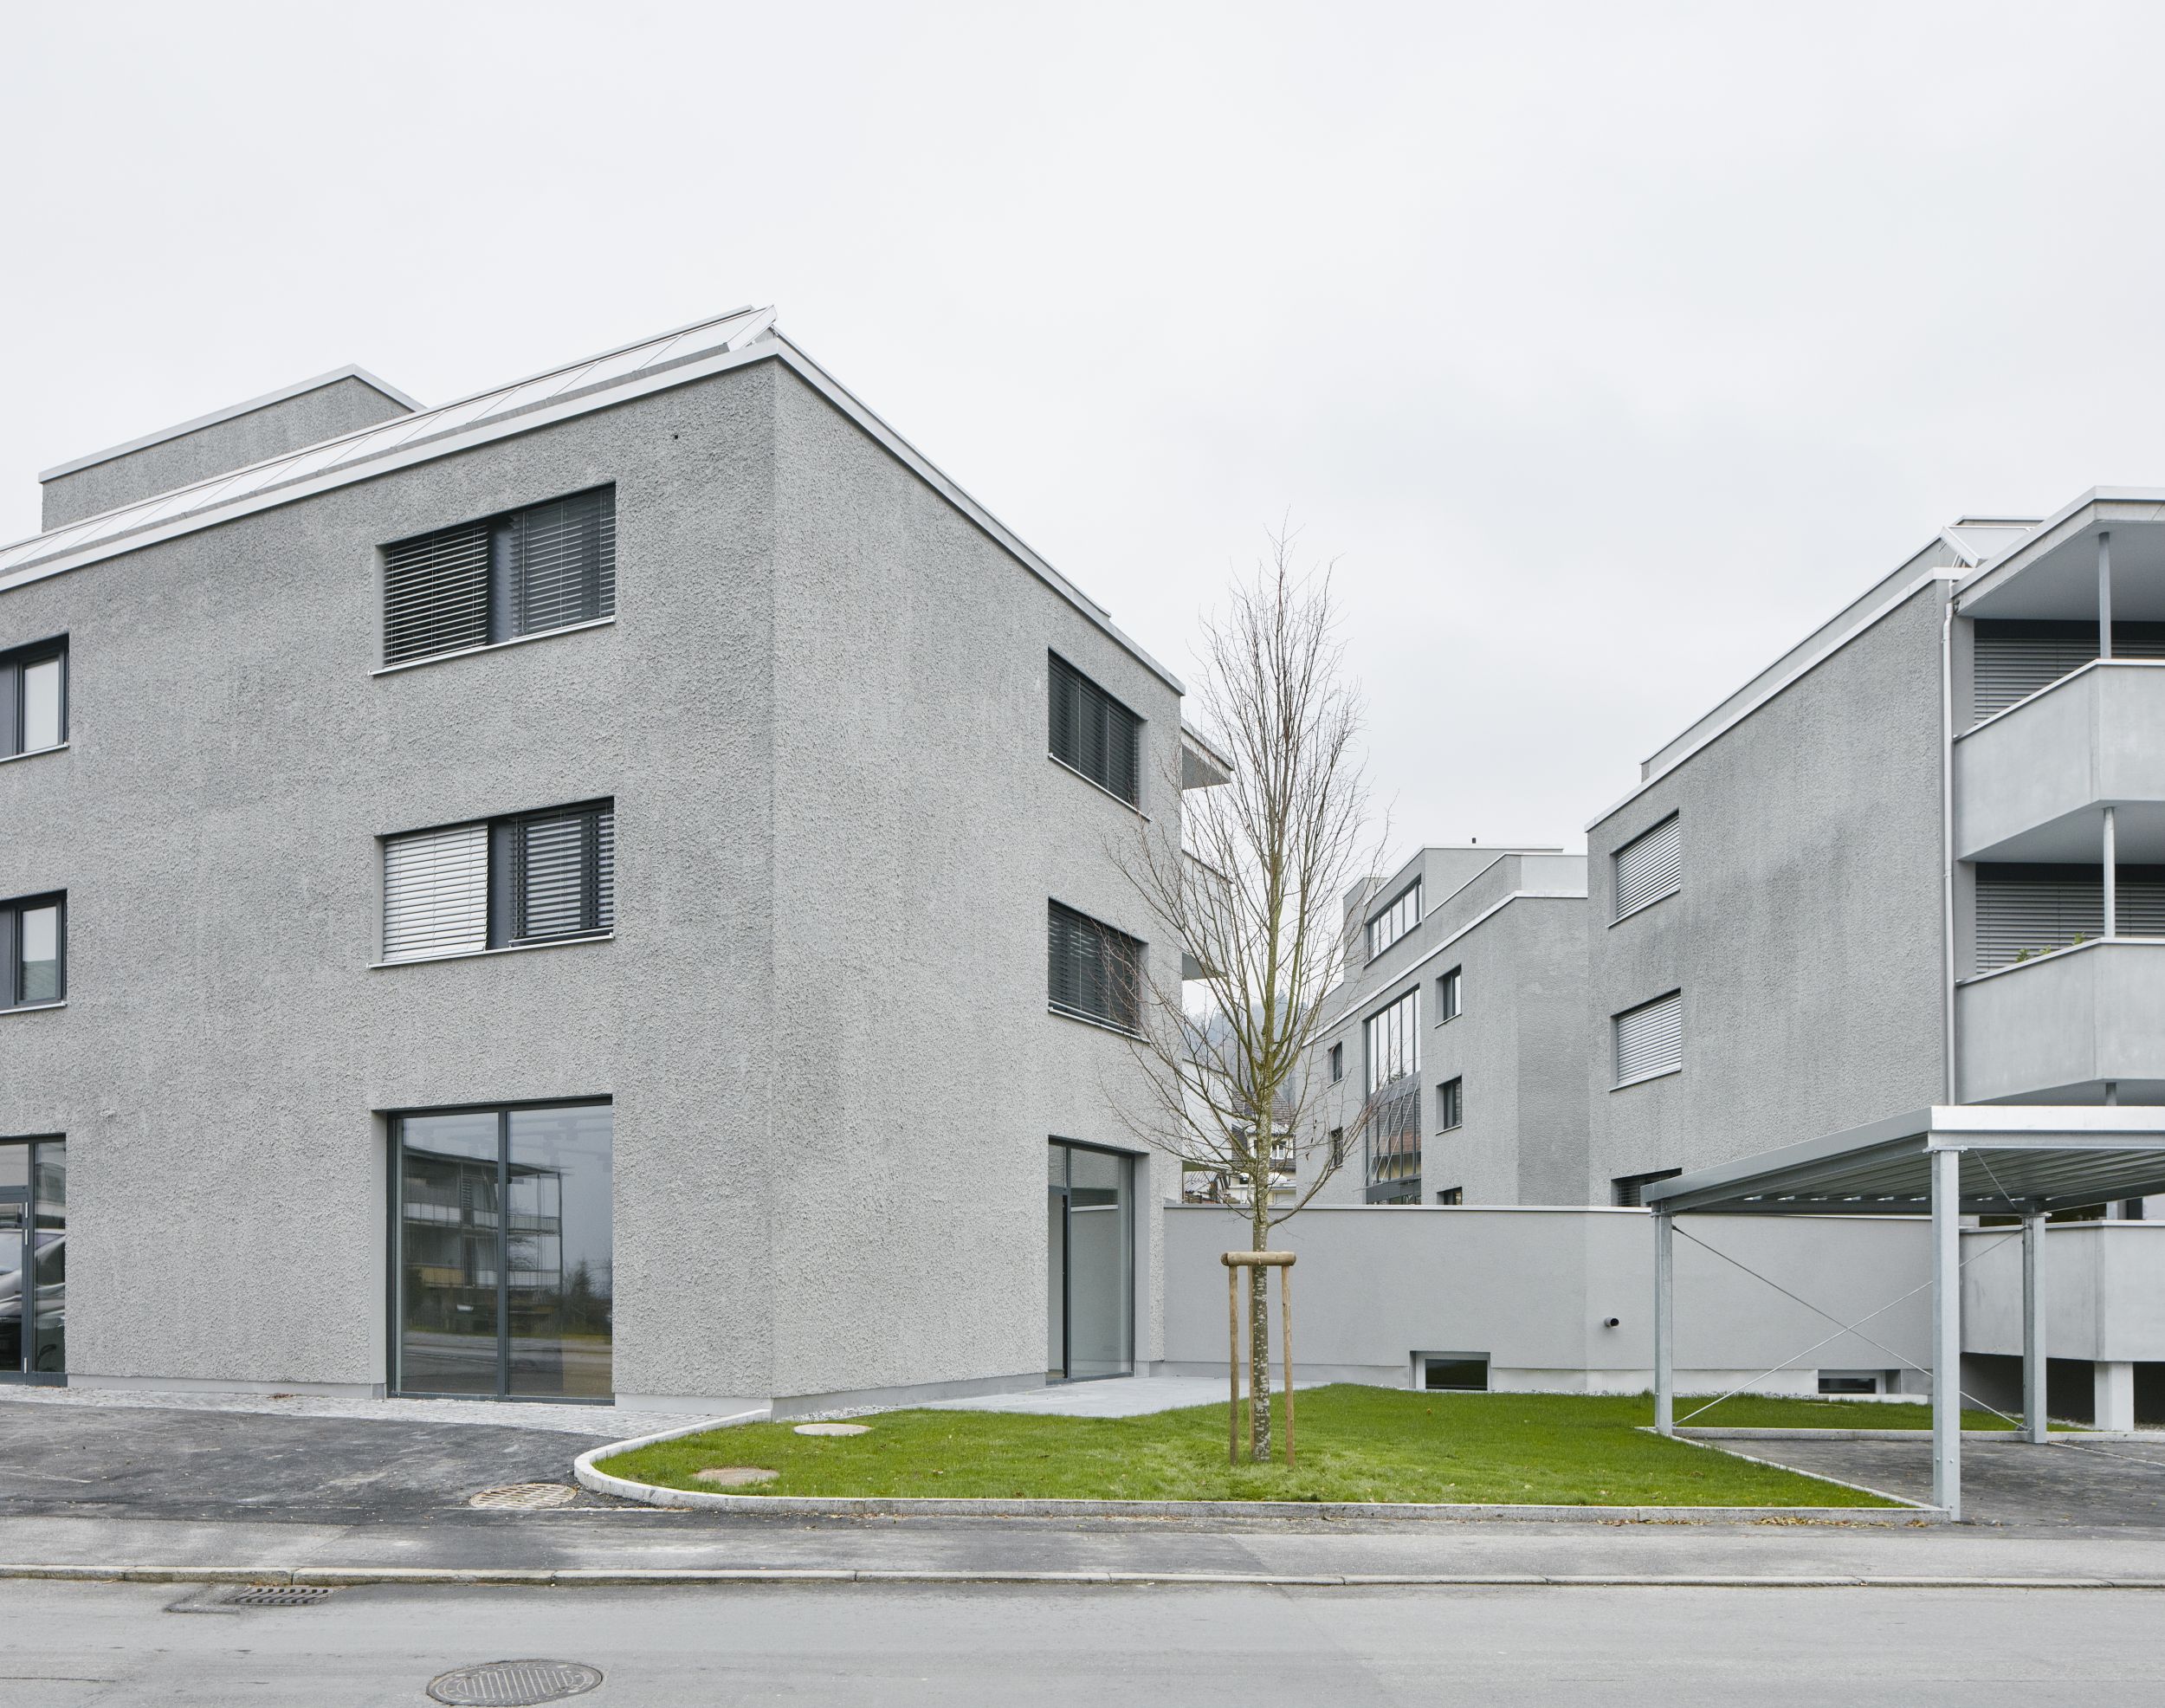 Mühlegasse 8, 6850 Dornbirn - Real estate project development